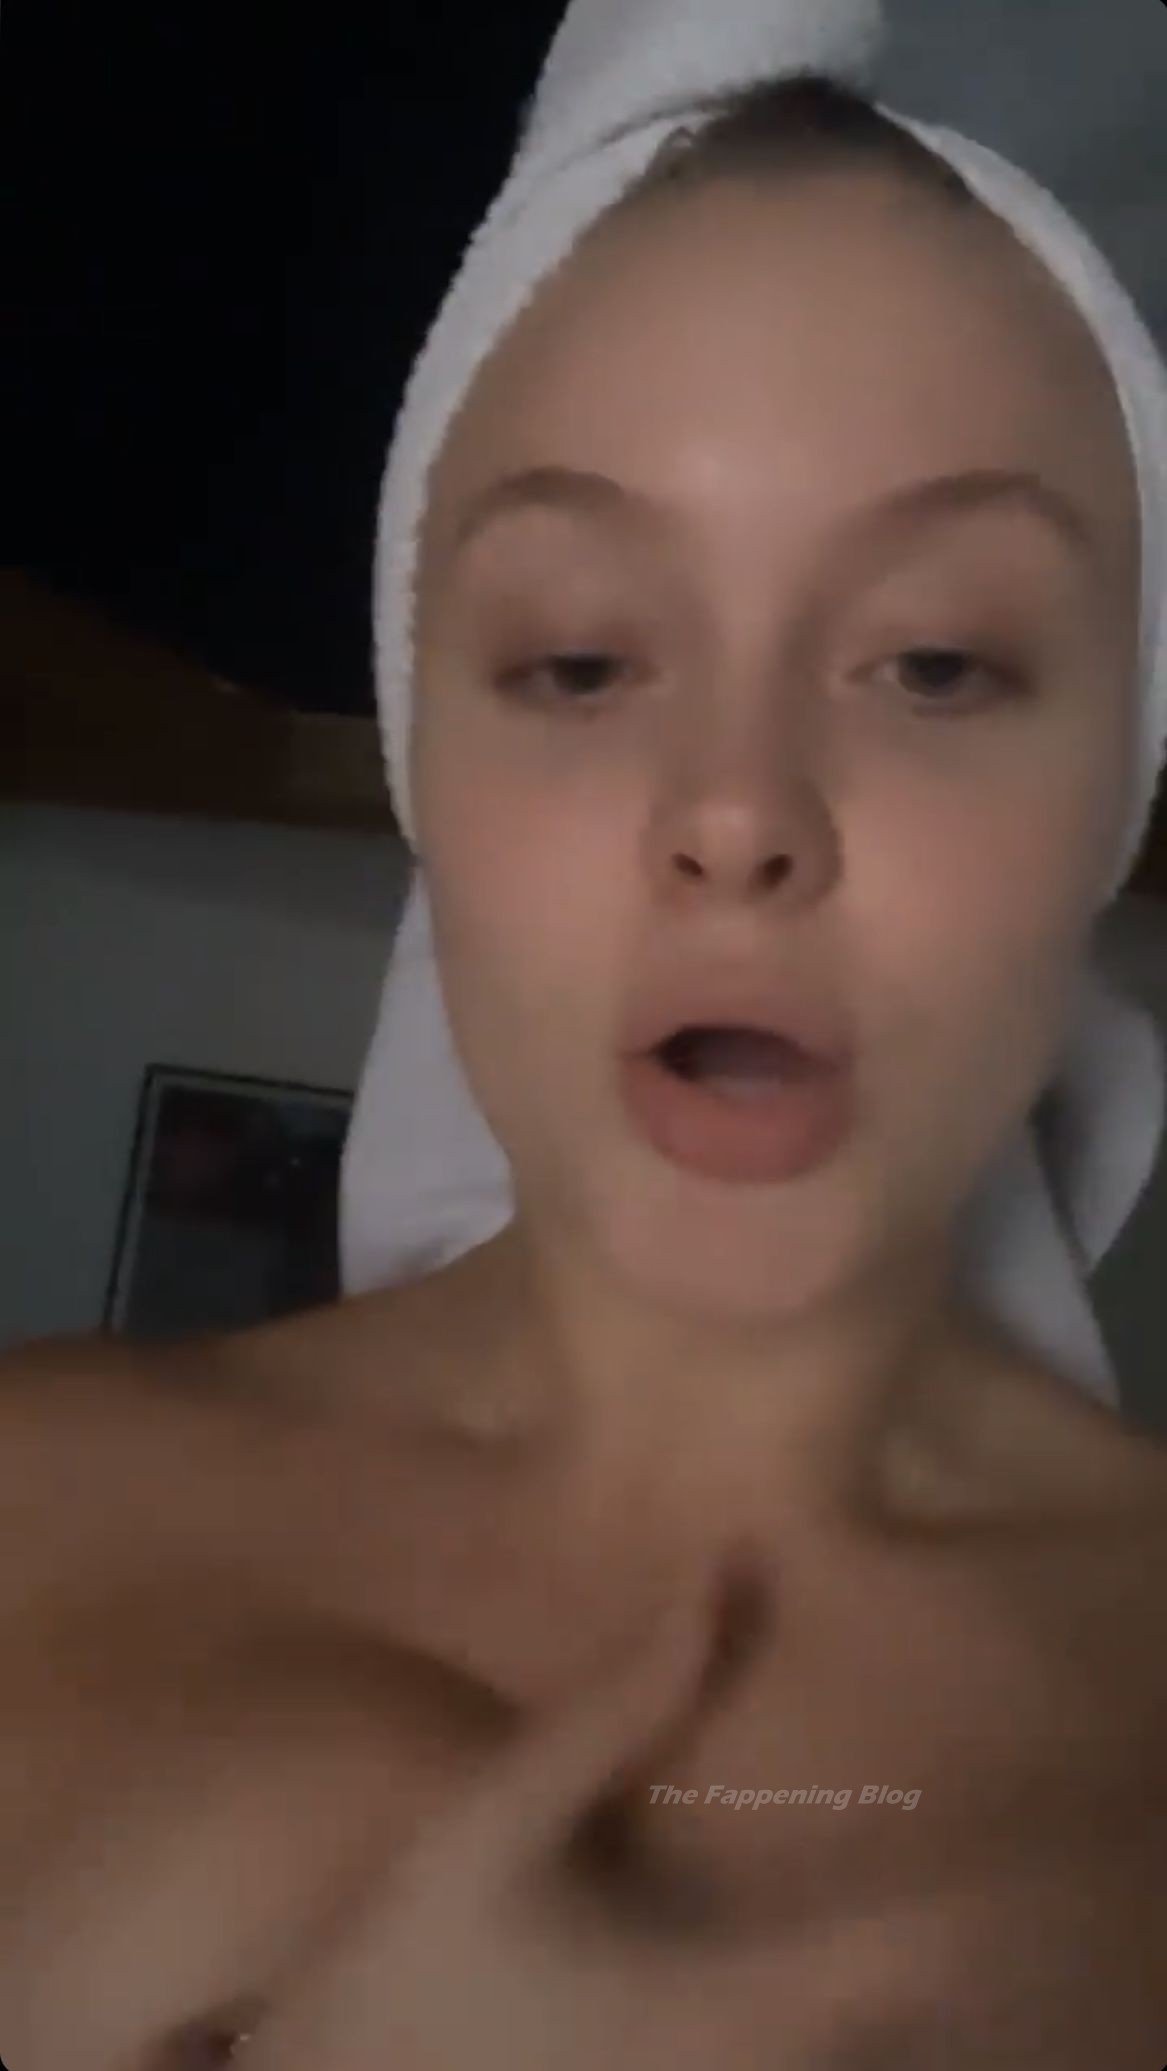 Zara larsson topless